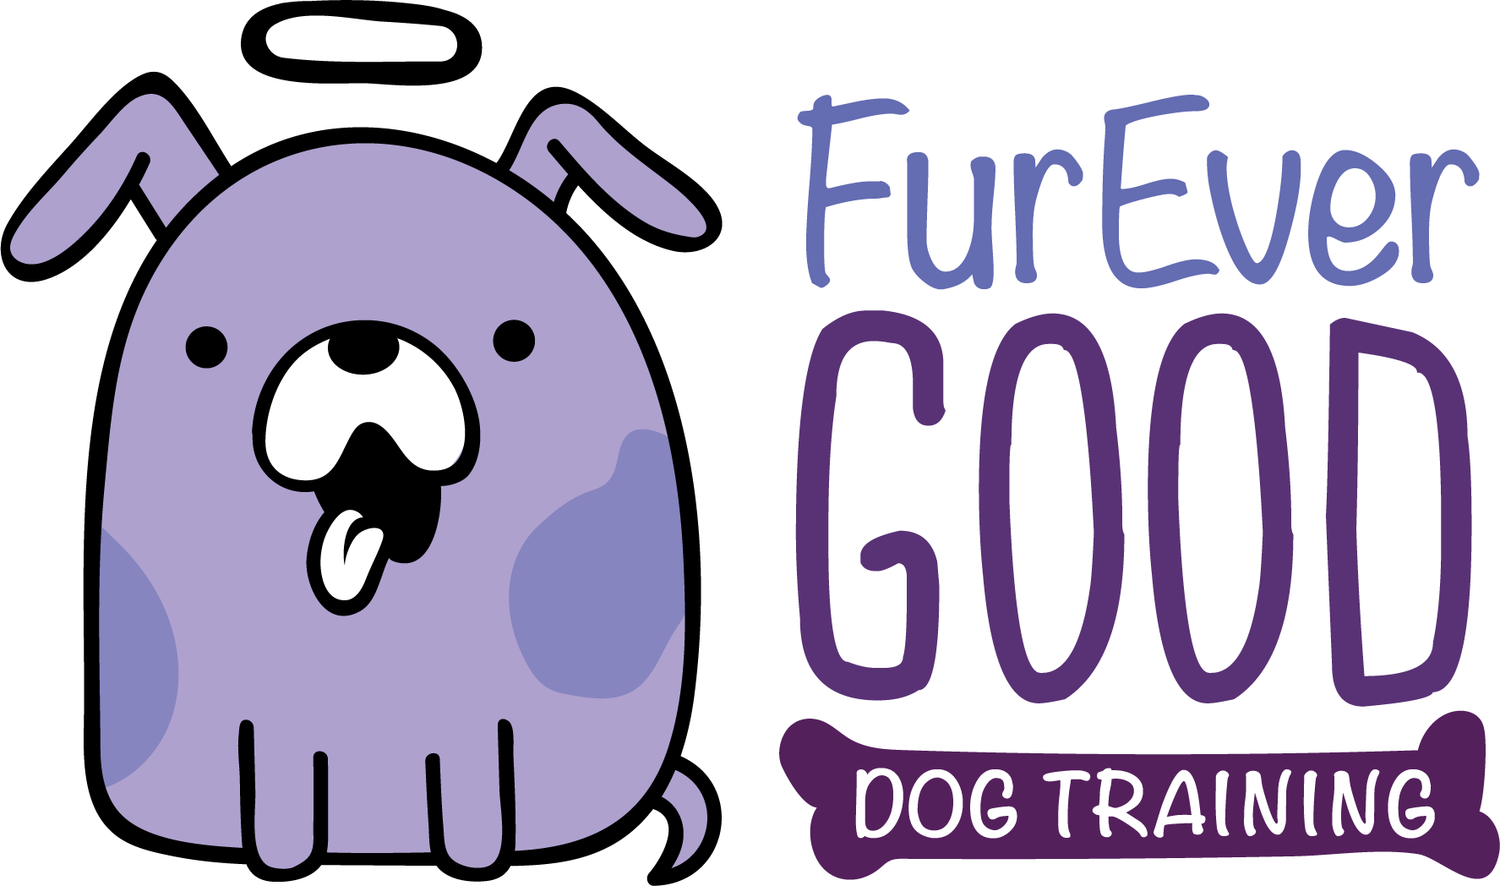 FurEver Good Dog Training